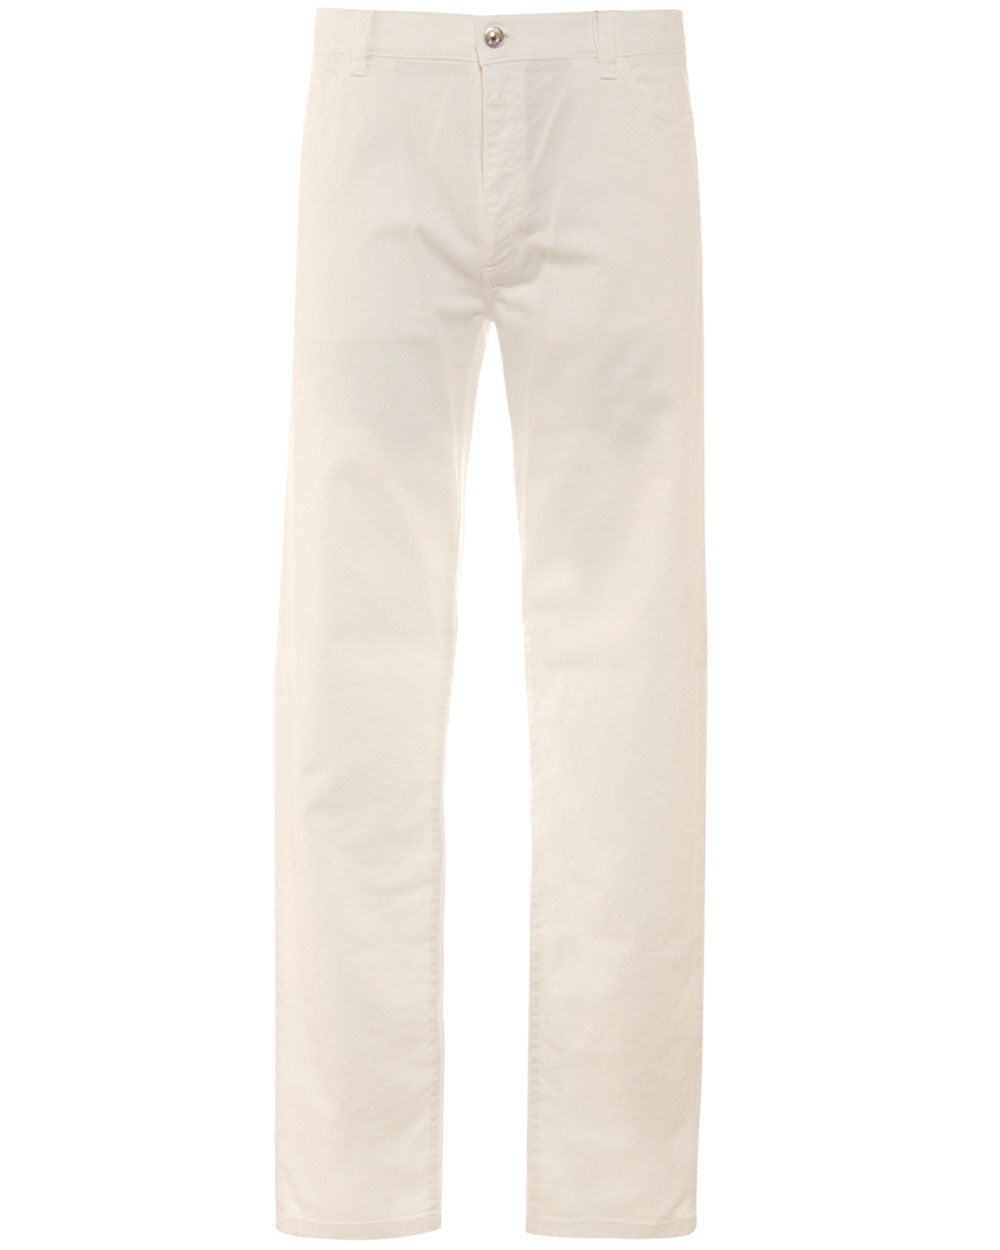 White Stretch 5 Pocket Pant